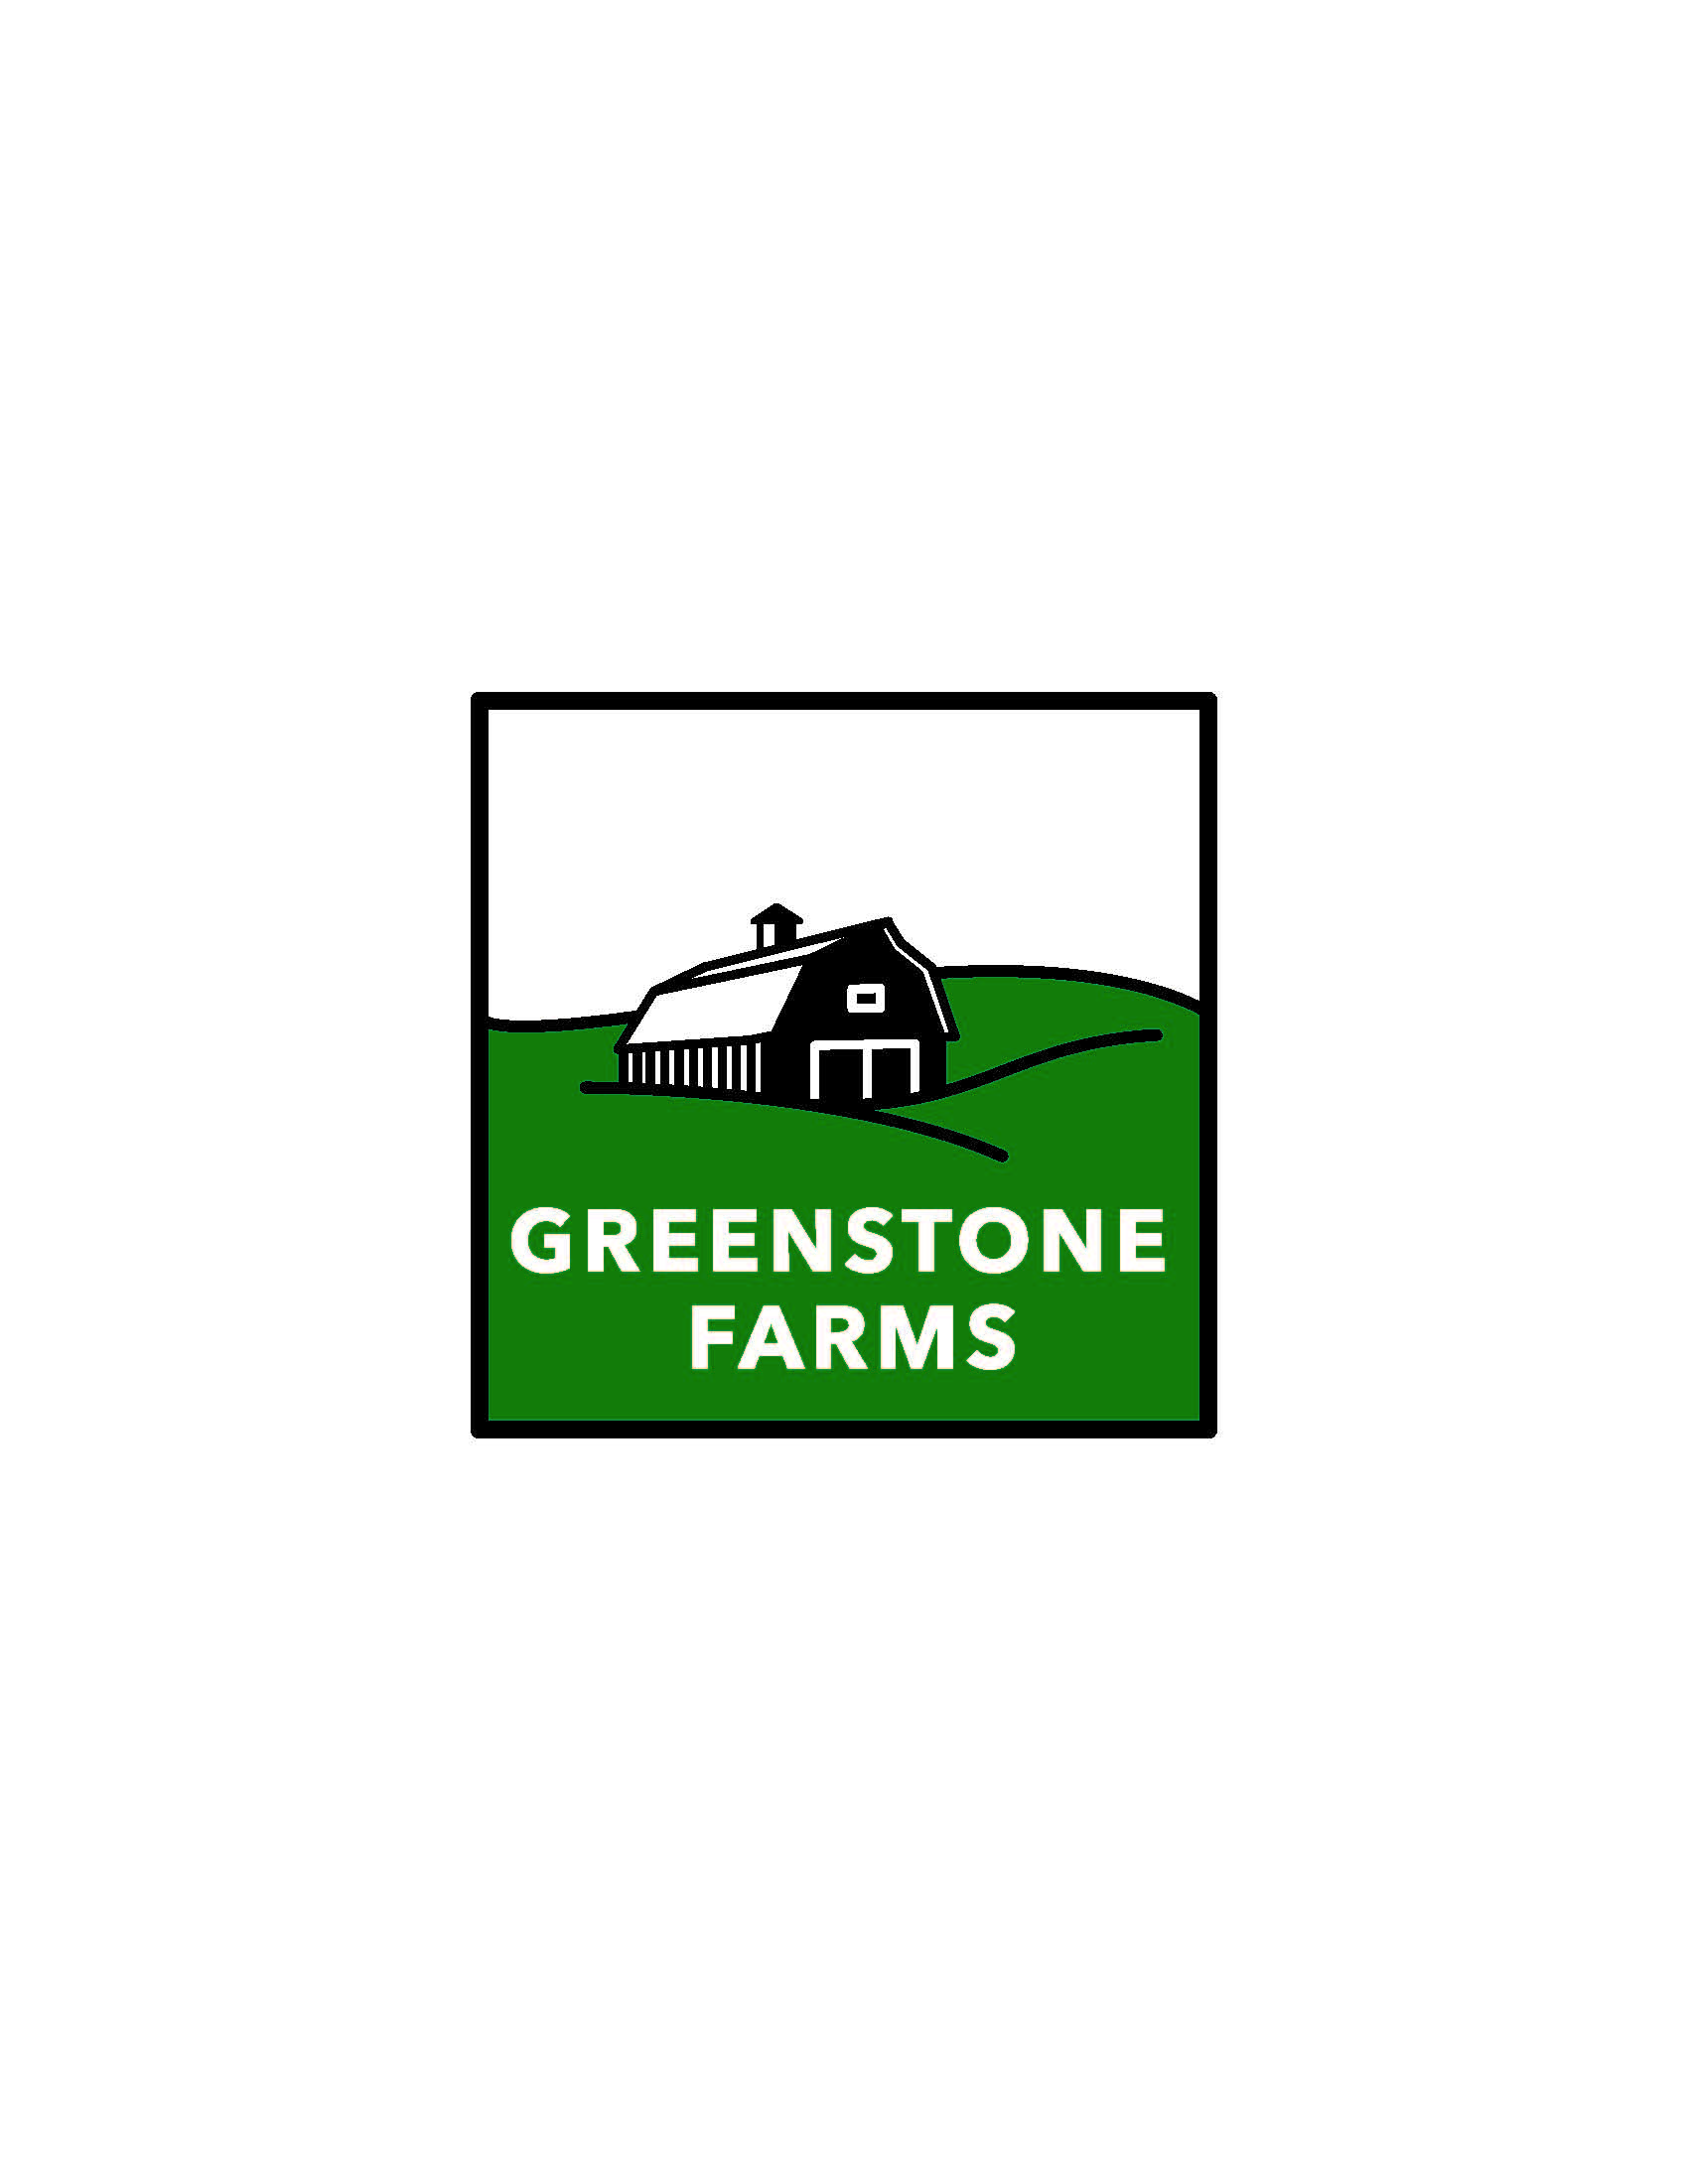 greenstone_logo.10.21.16_Page_1.jpg